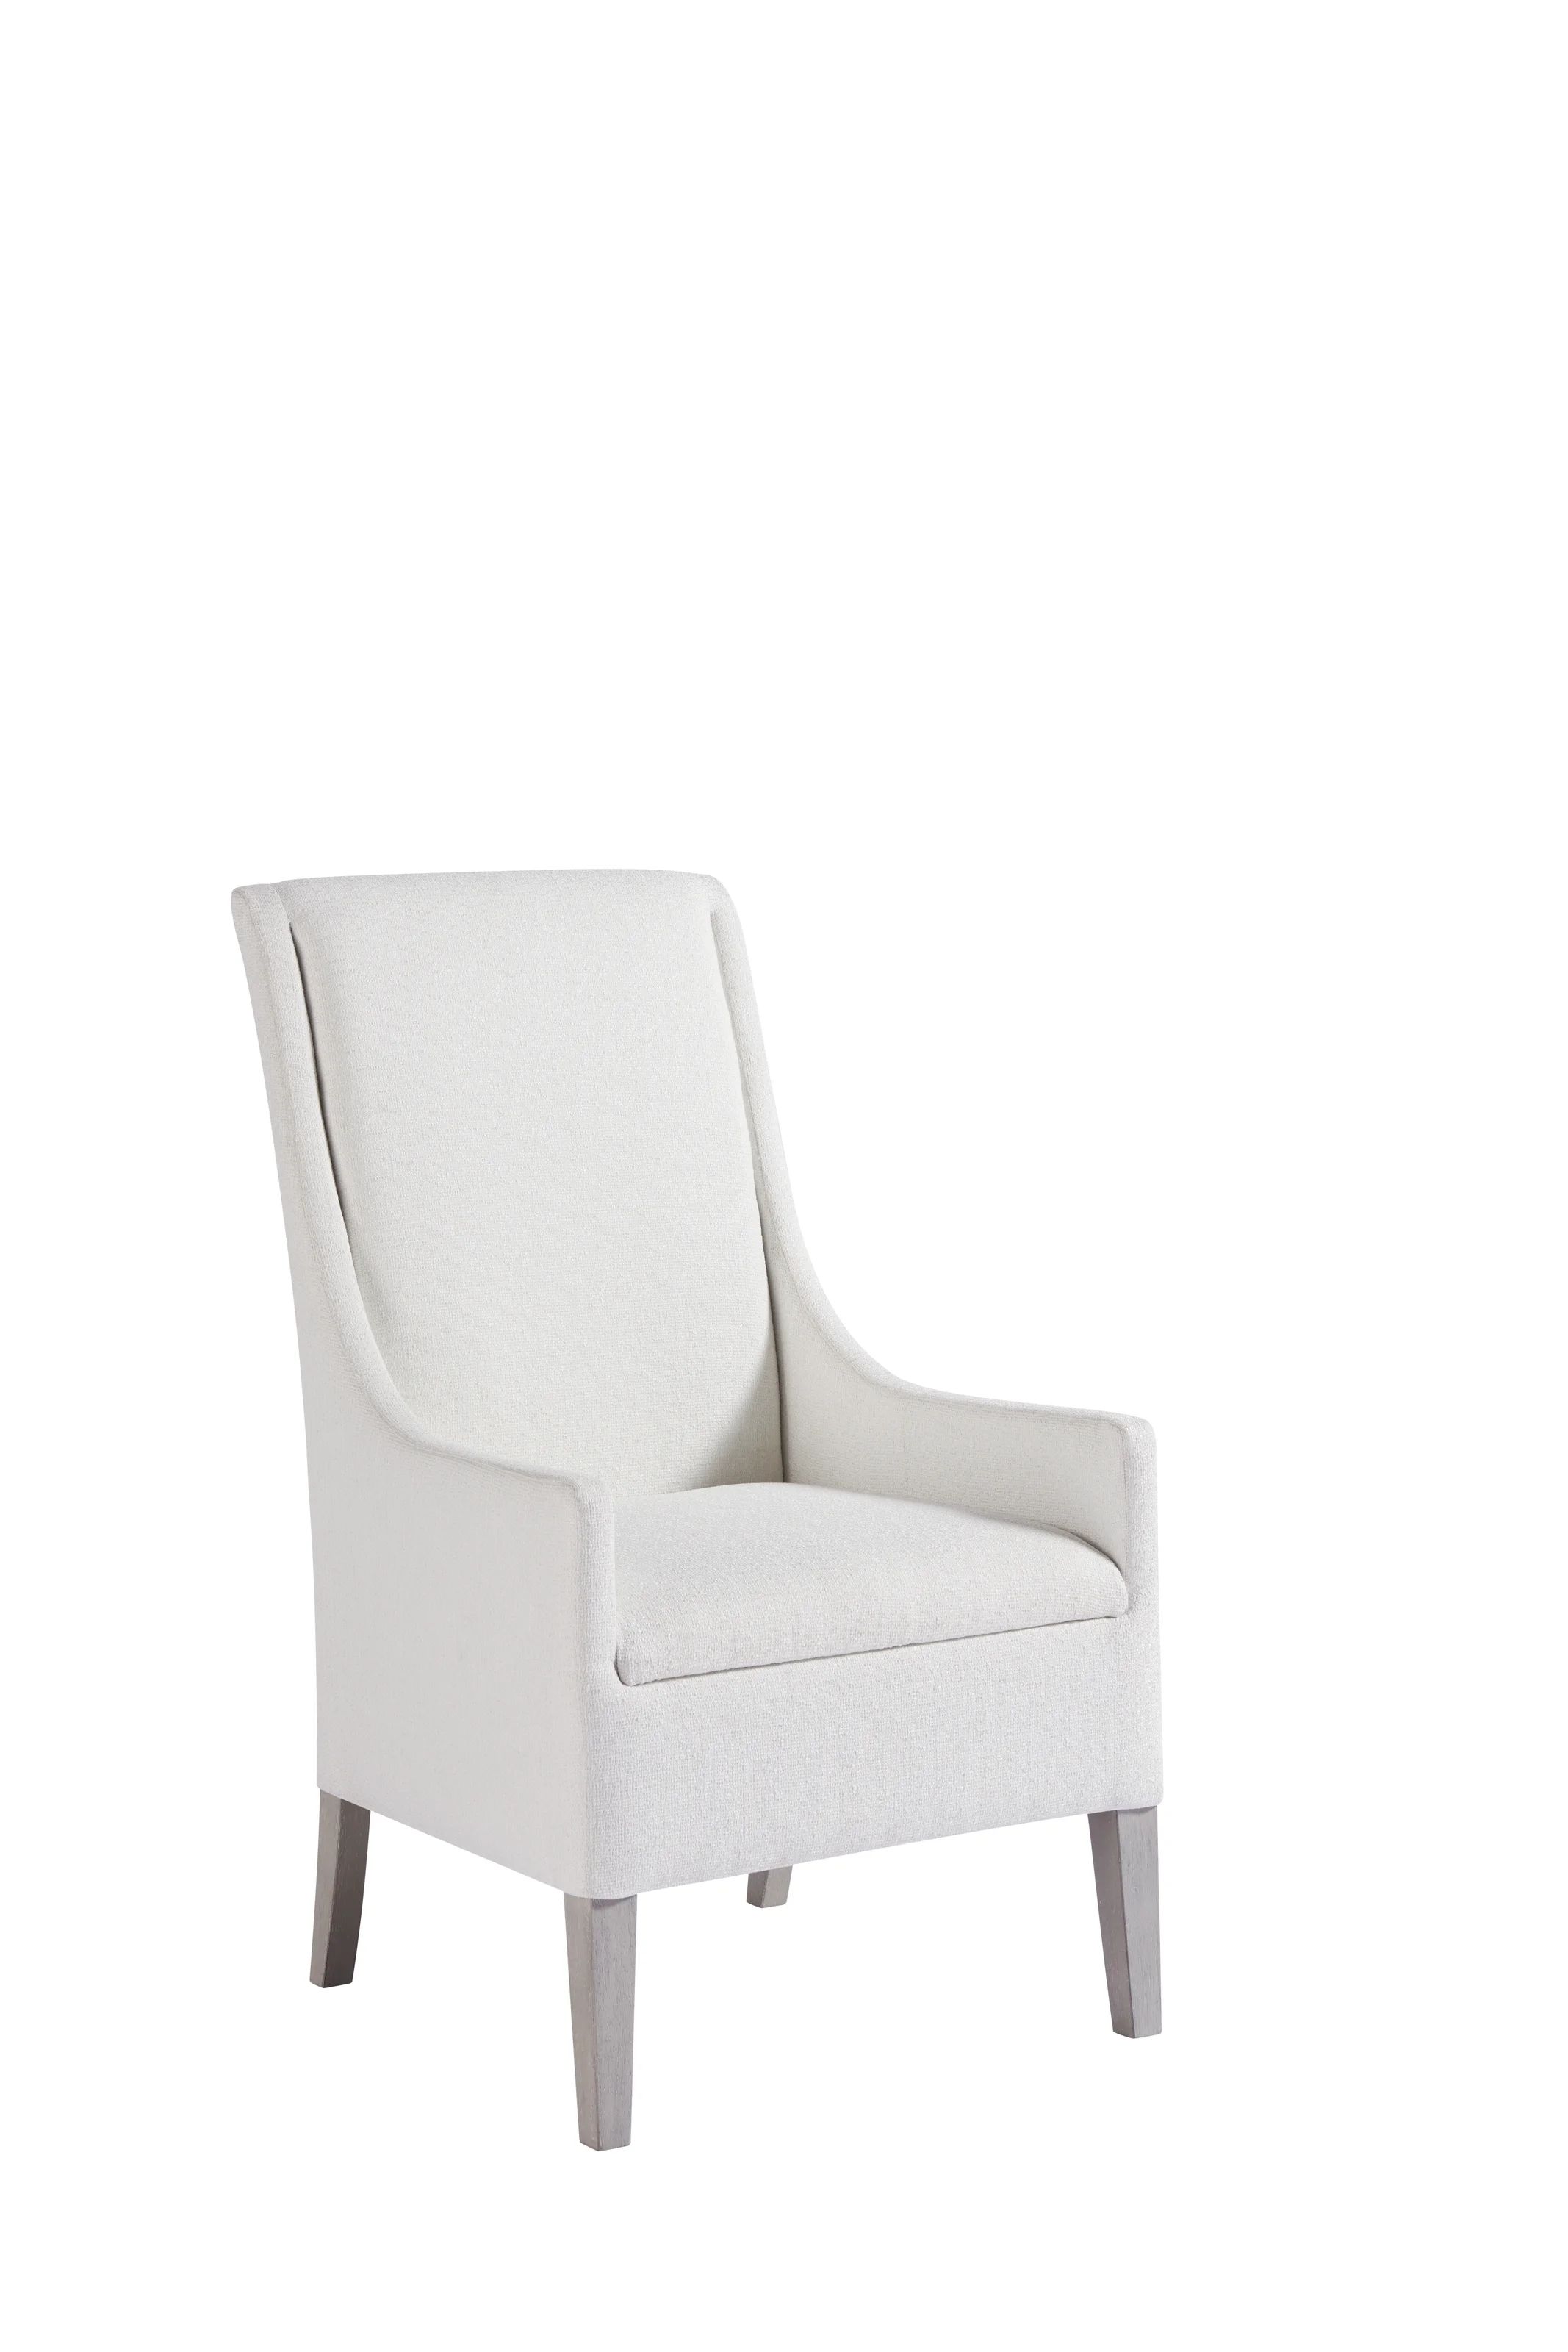 Agastya Arm Chair in White | Wayfair Professional